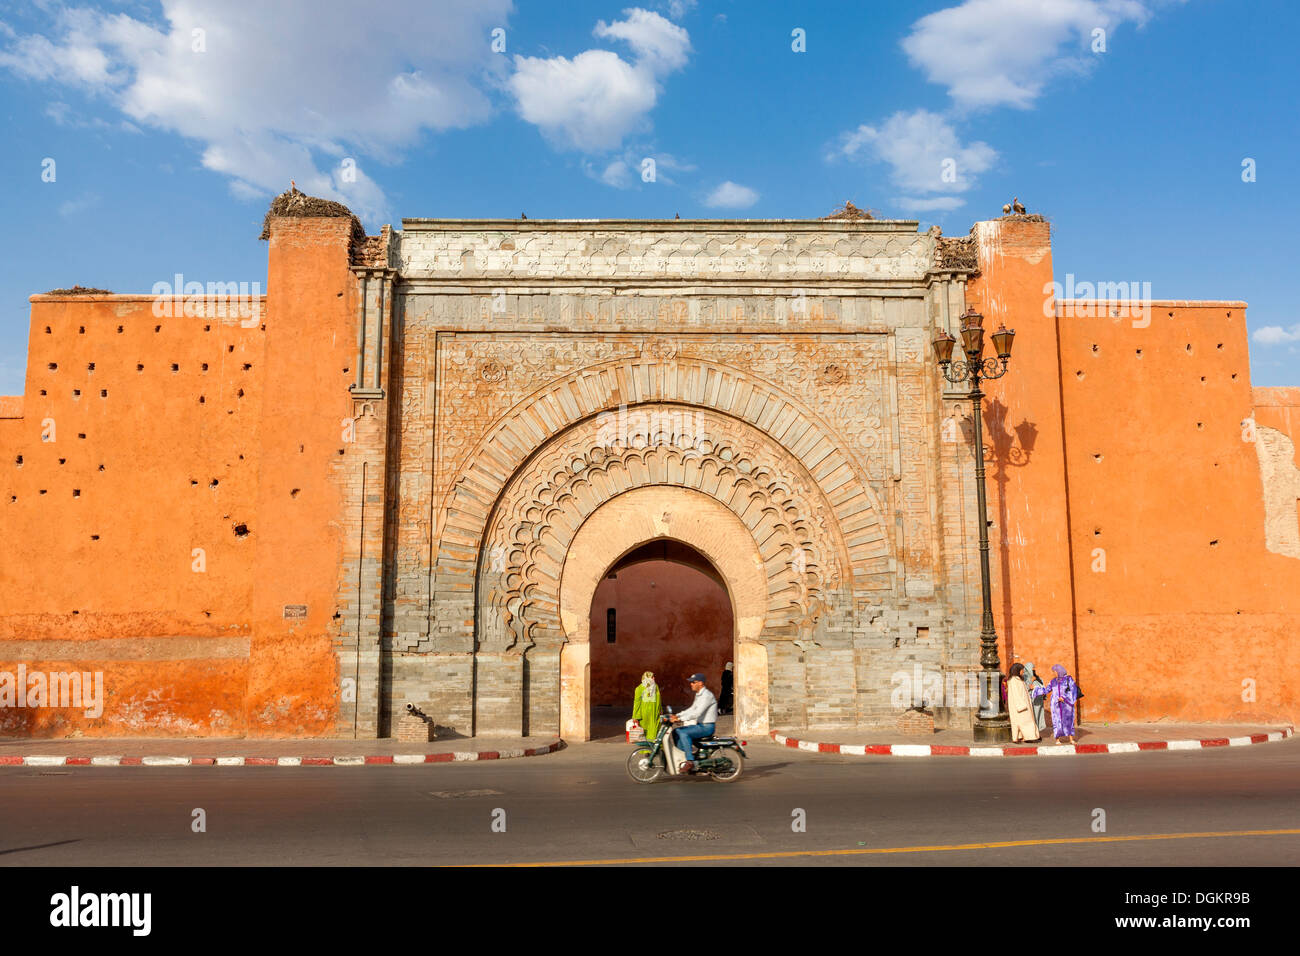 The Bab Agnaou city gate in Marrakesh. Stock Photo